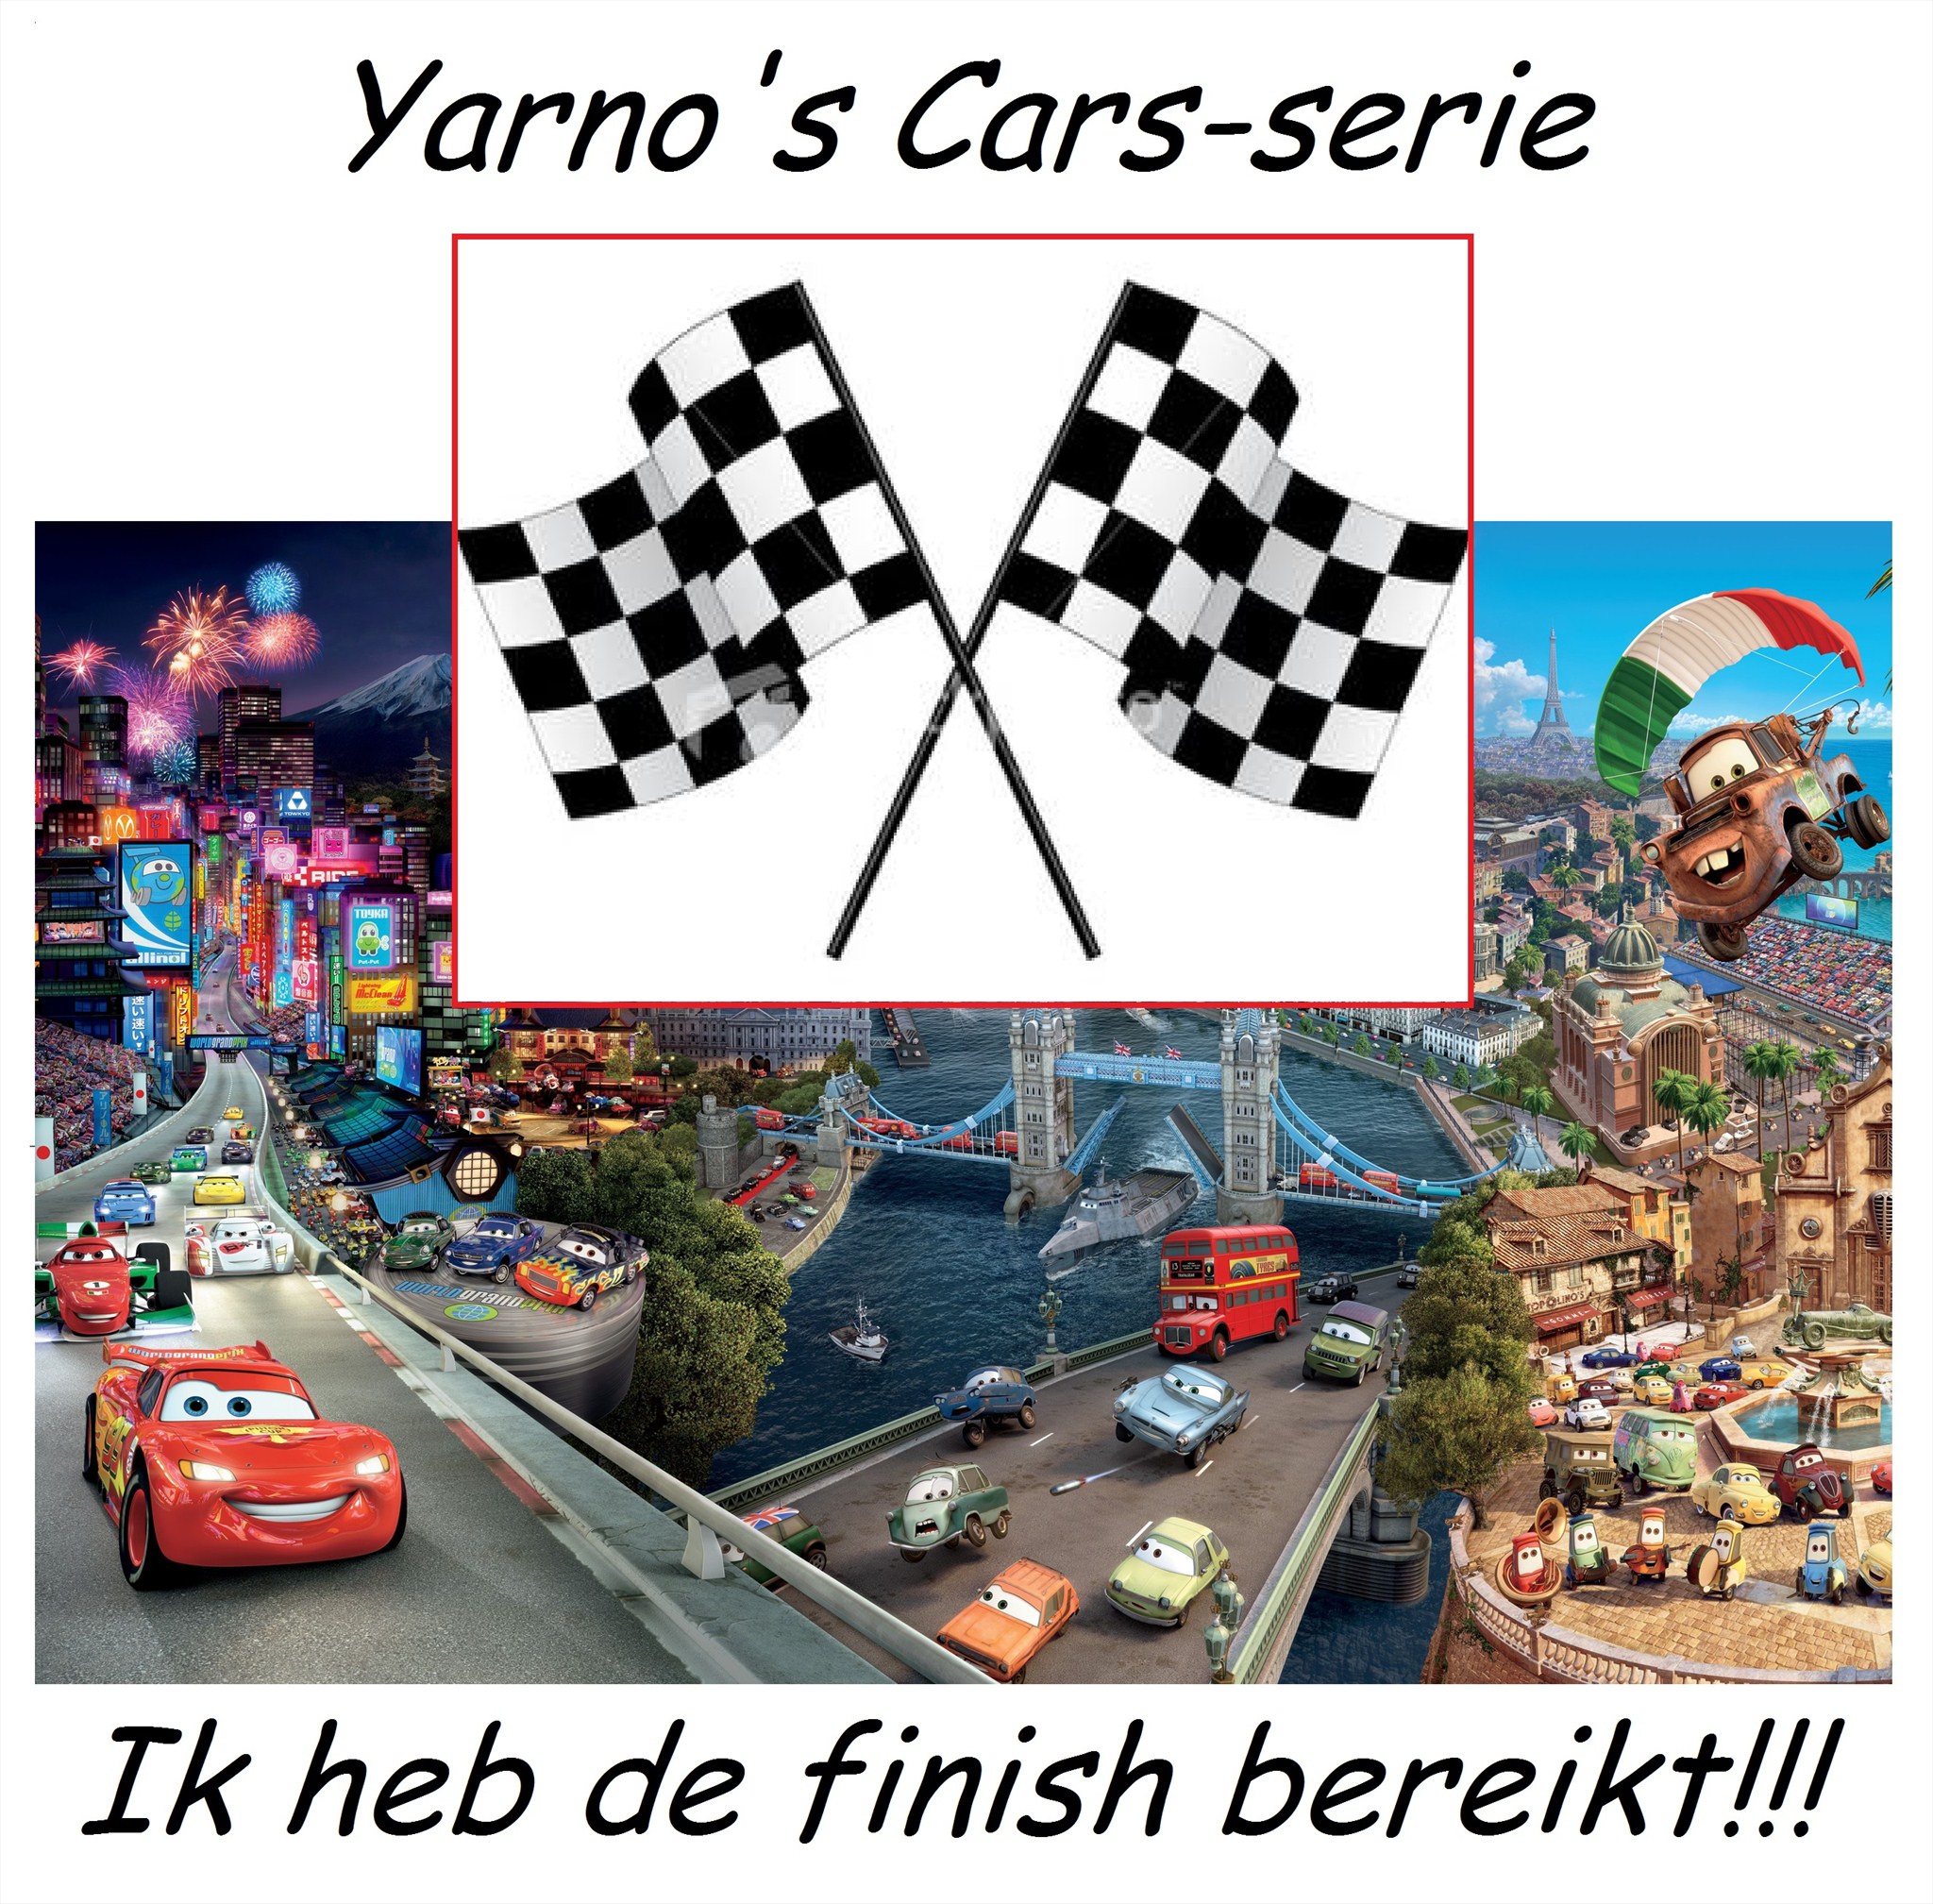 Yarno's Cars Serie